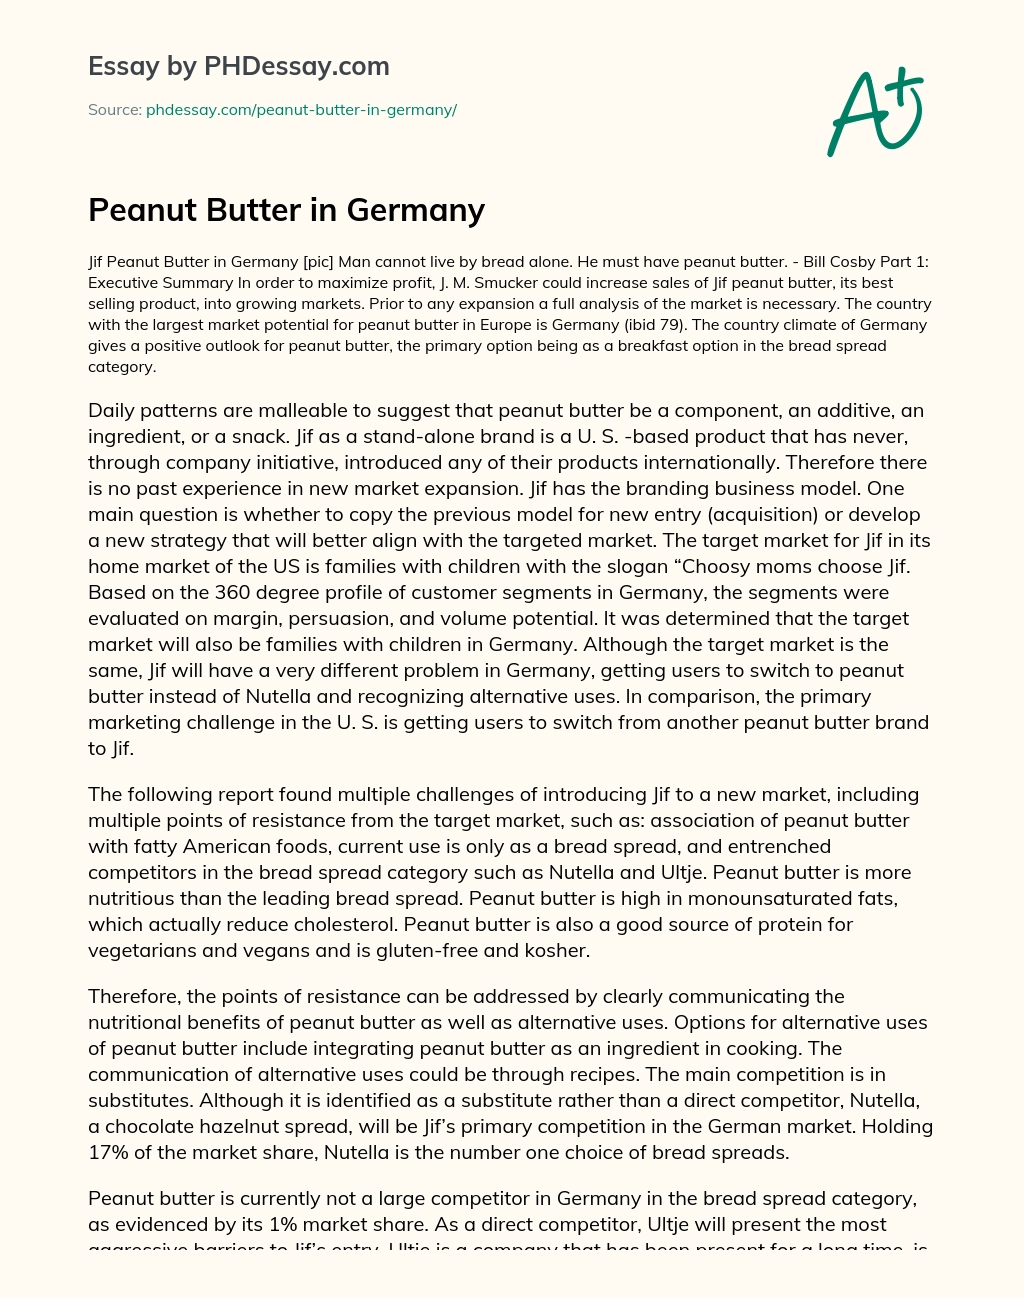 Peanut Butter in Germany essay